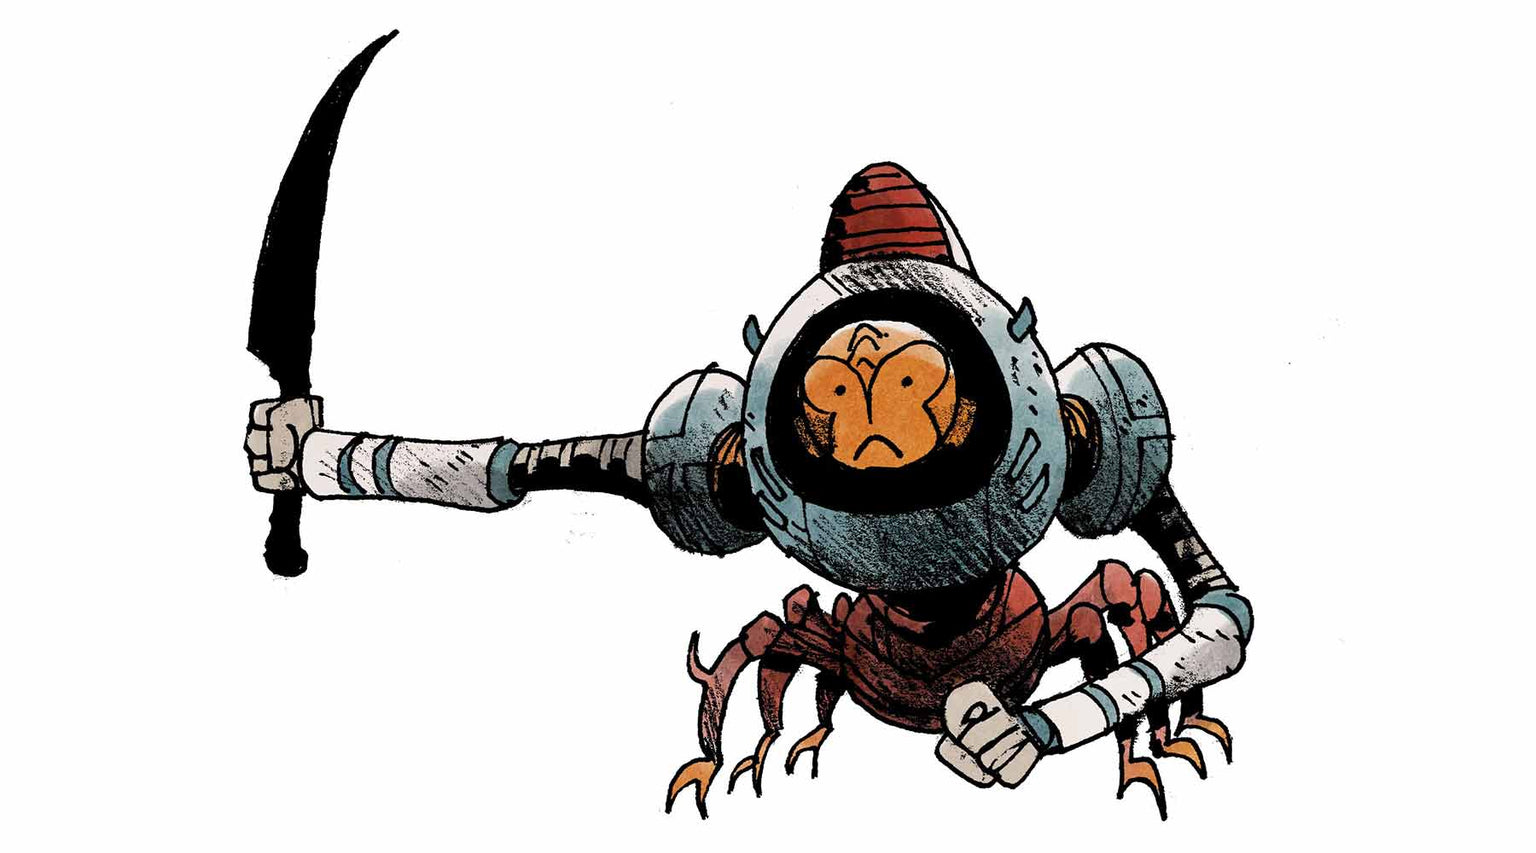 An armored alien on six bug-like legs holds a curved blade aloft, threateningly